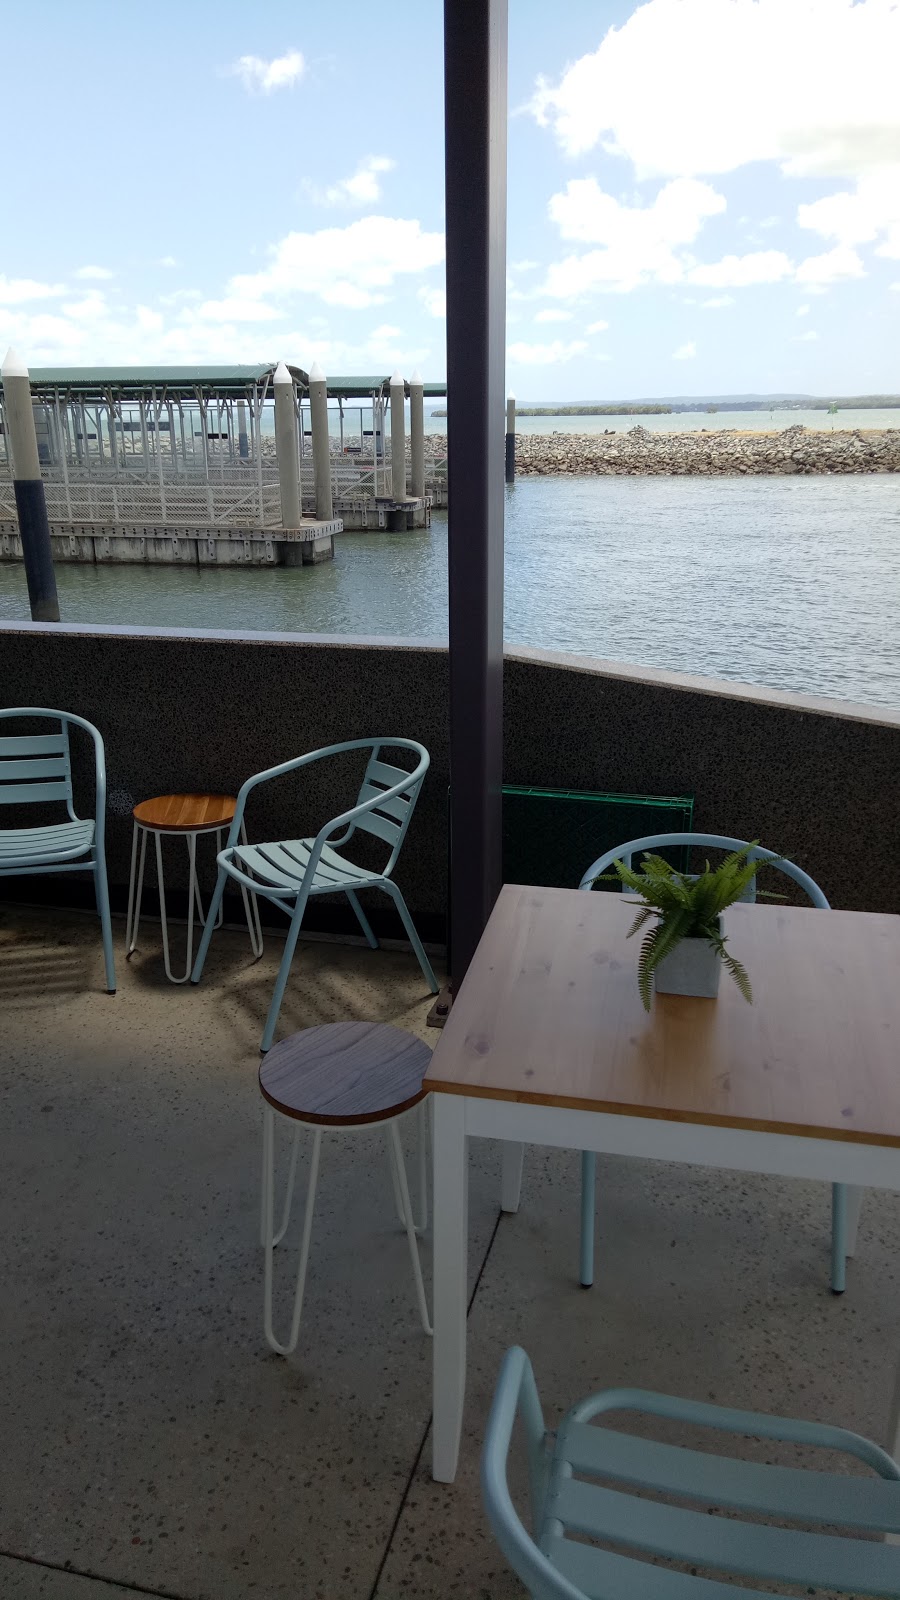 Jetty Coffee Co. | cafe | Banana St, Redland Bay QLD 4165, Australia